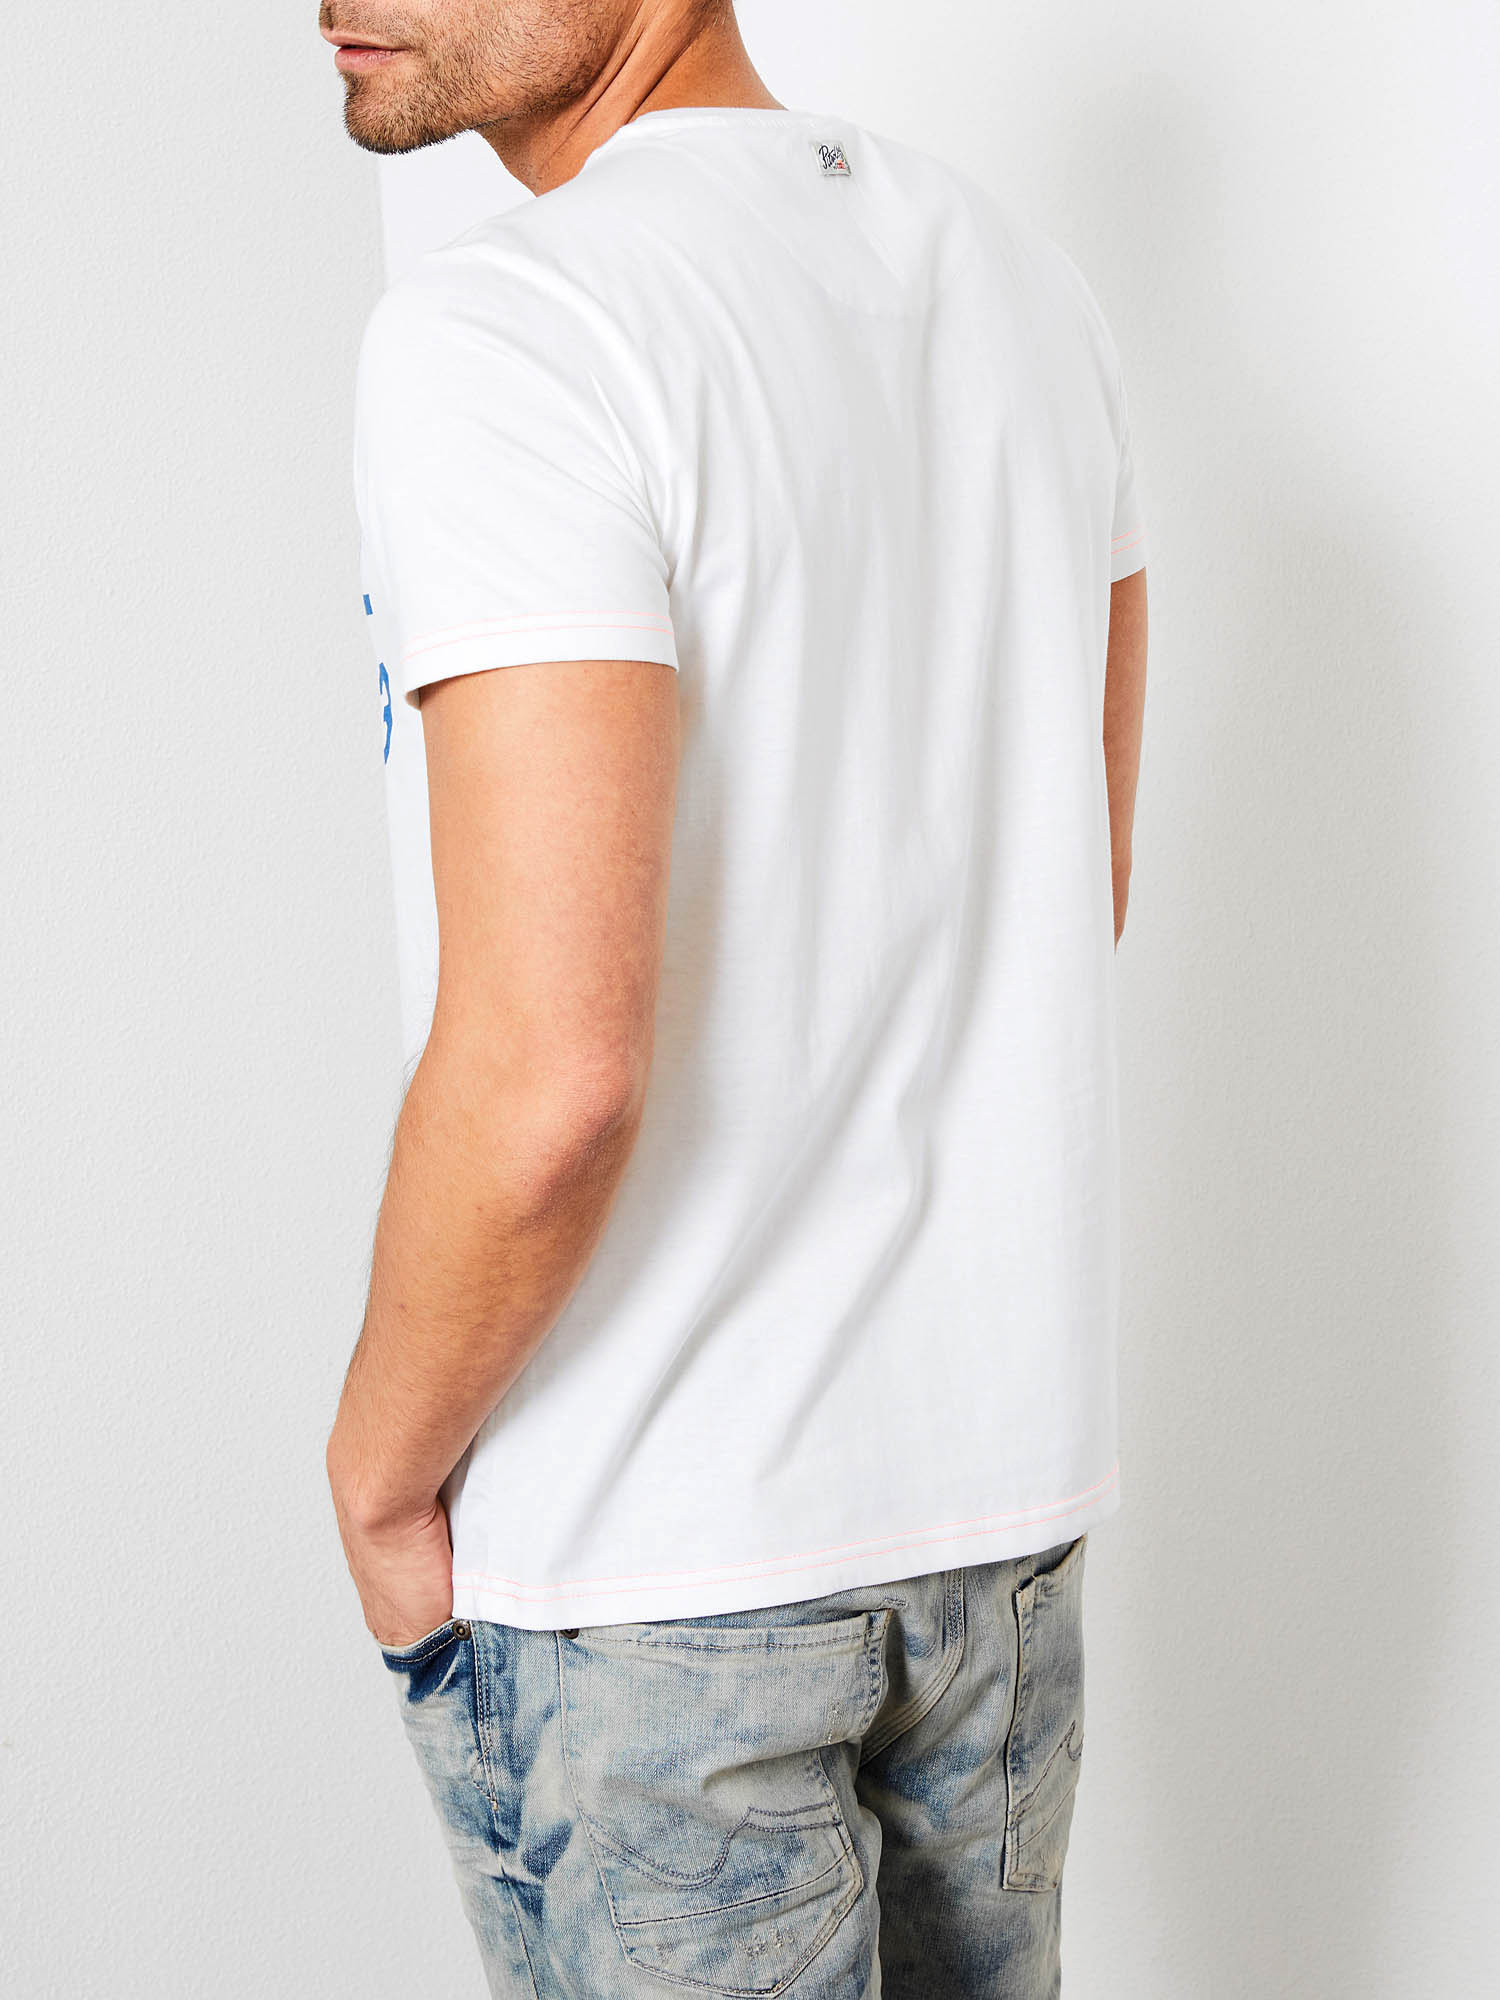 Petrol T-shirt Style - Artwork Menswear Bright J Industries White